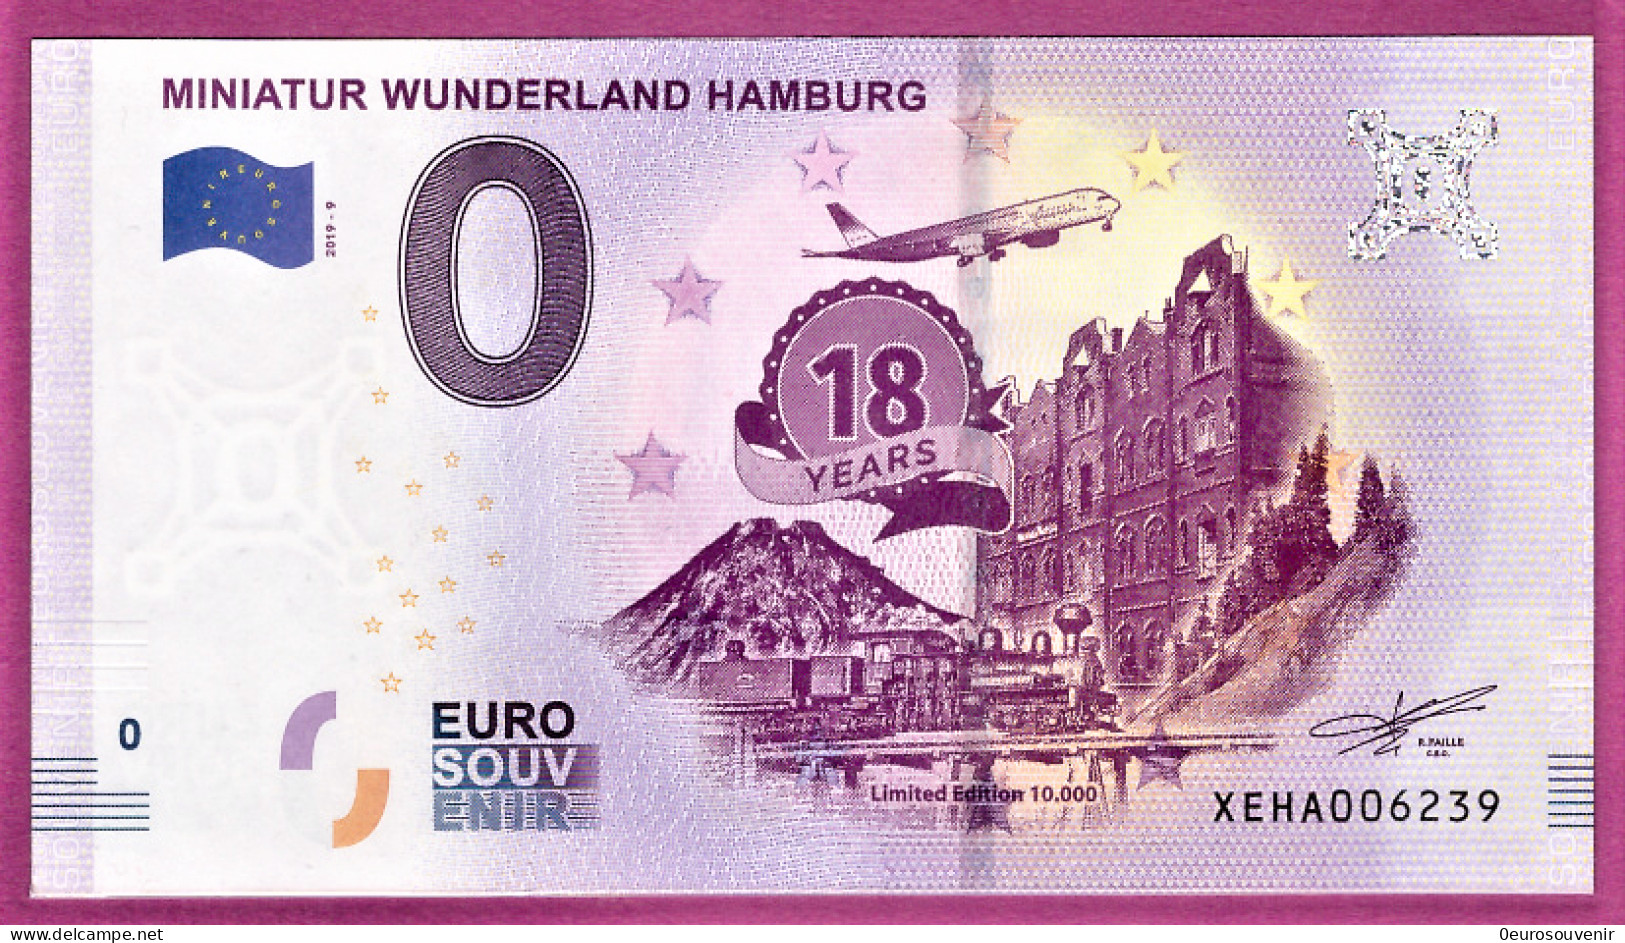 0-Euro XEHA 2019-9 MINIATUR WUNDERLAND - HAMBURG - 18 YEARS JUBILÄUM - Essais Privés / Non-officiels